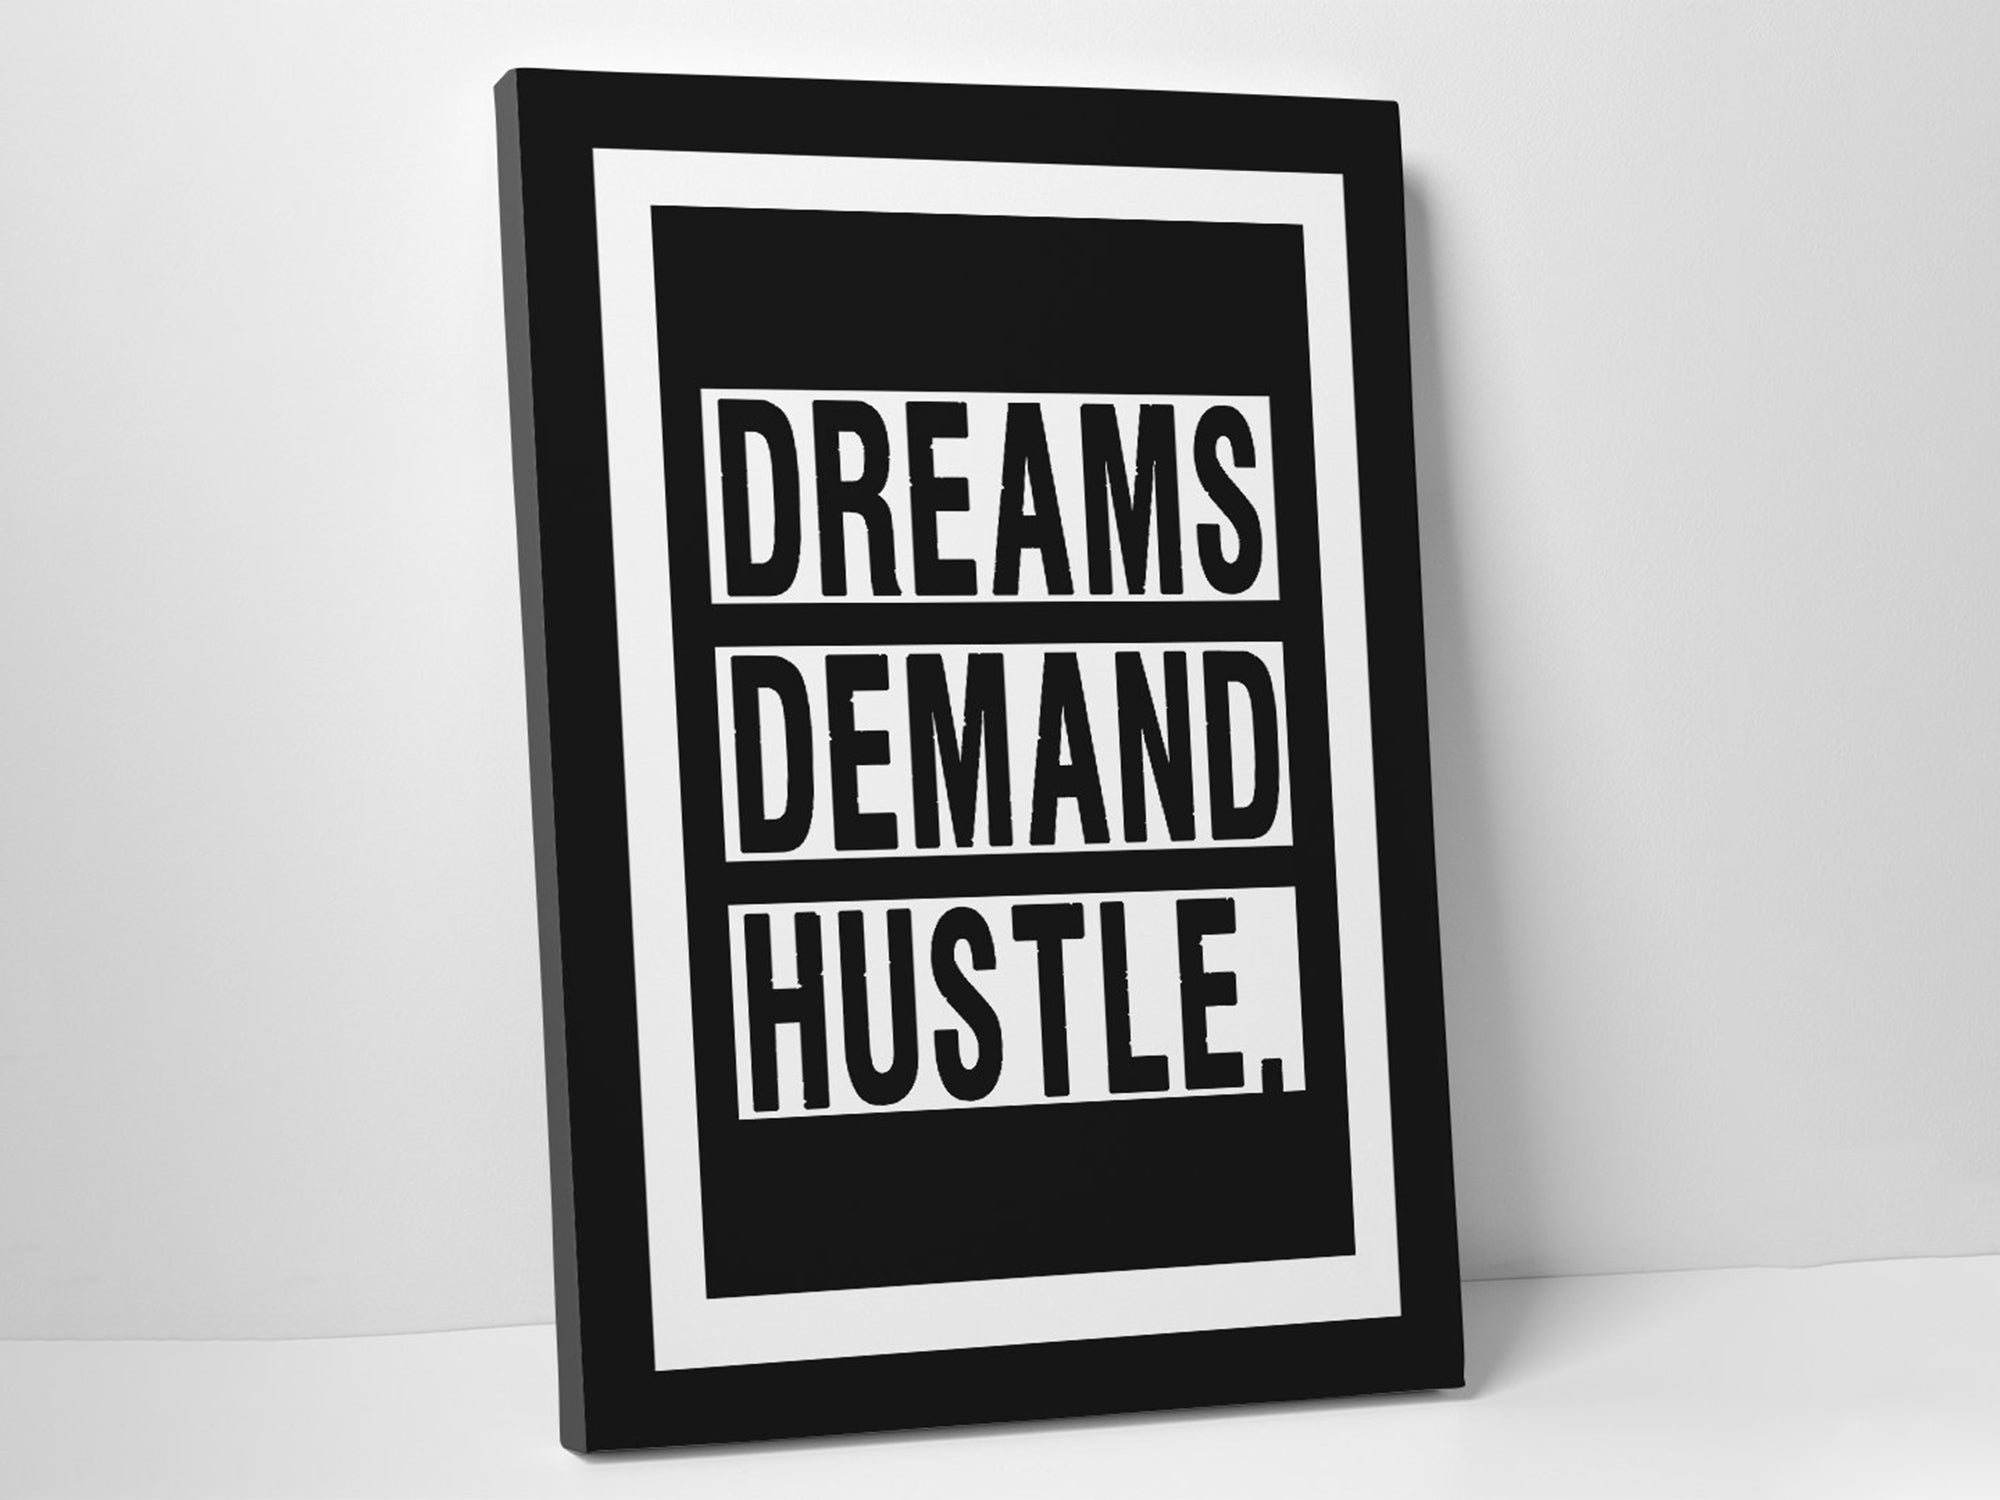 Dreams Demand Hustle - Motivation - Canvas Wall Art